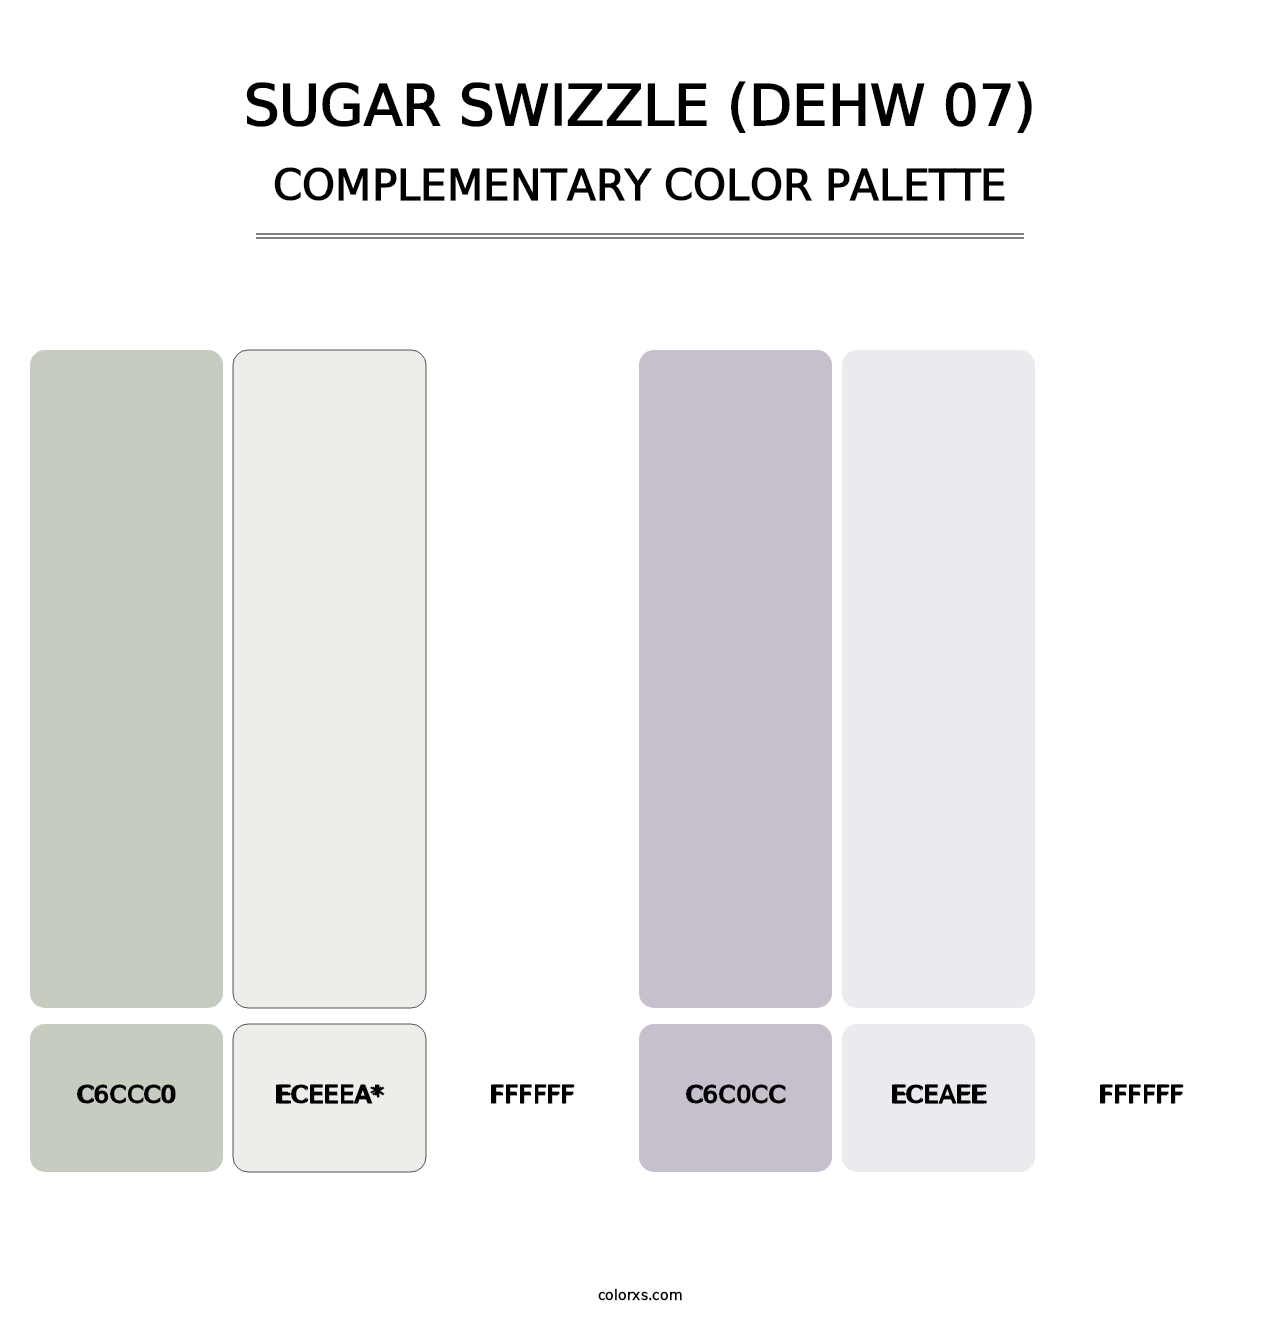 Sugar Swizzle (DEHW 07) - Complementary Color Palette